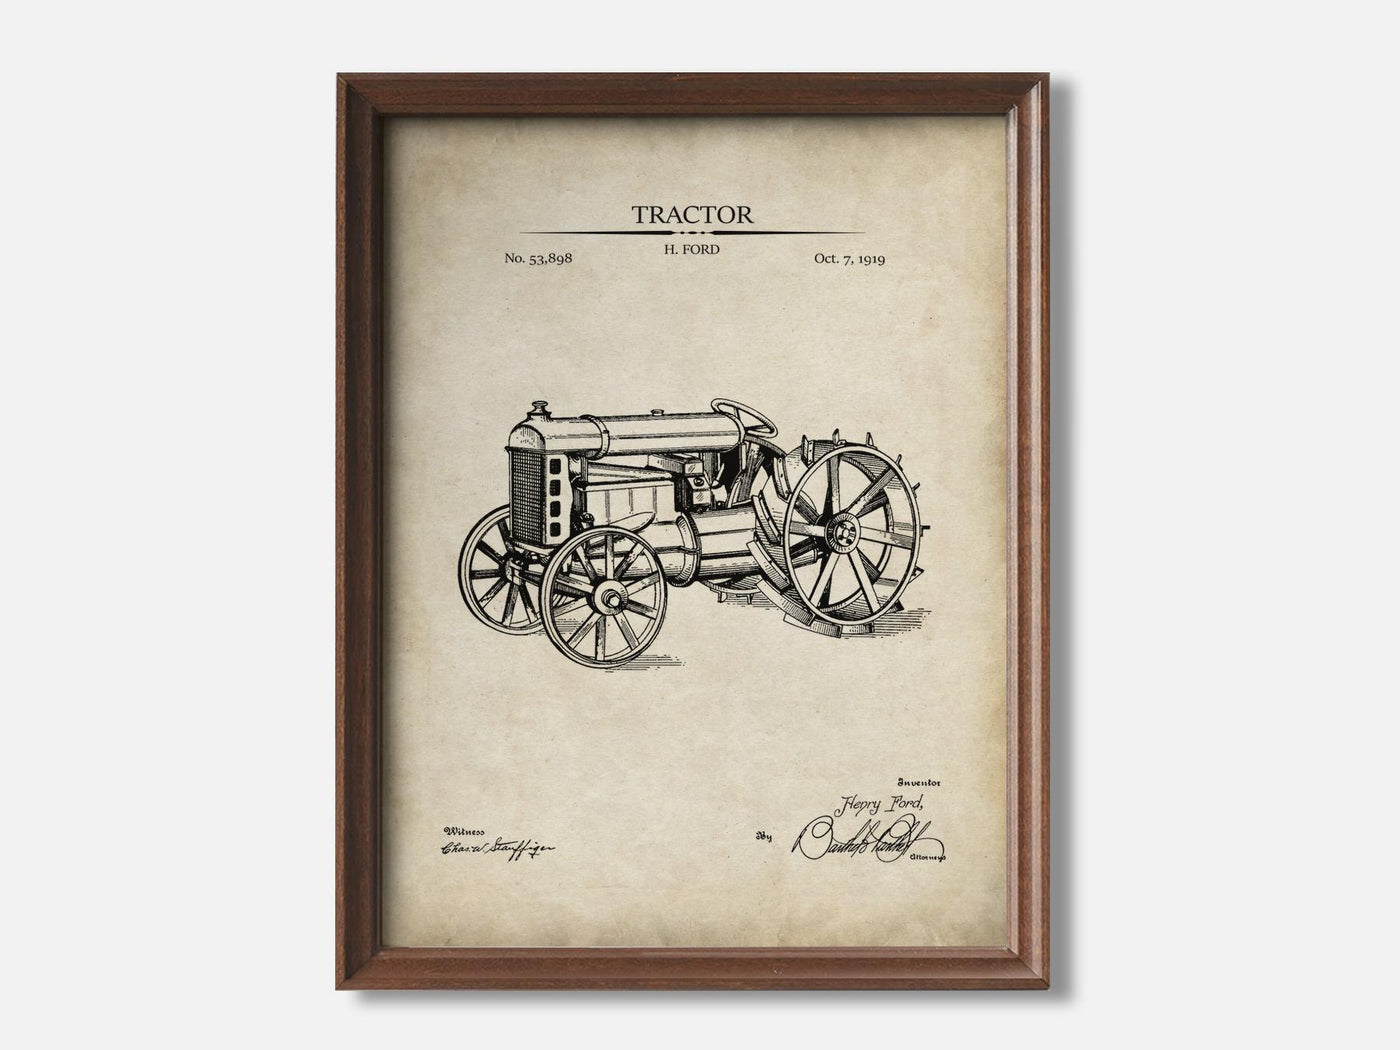 Tractor Patent Print mockup - A_t10025.3-V1-PC_F+WA-SS_1-PS_5x7-C_par variant